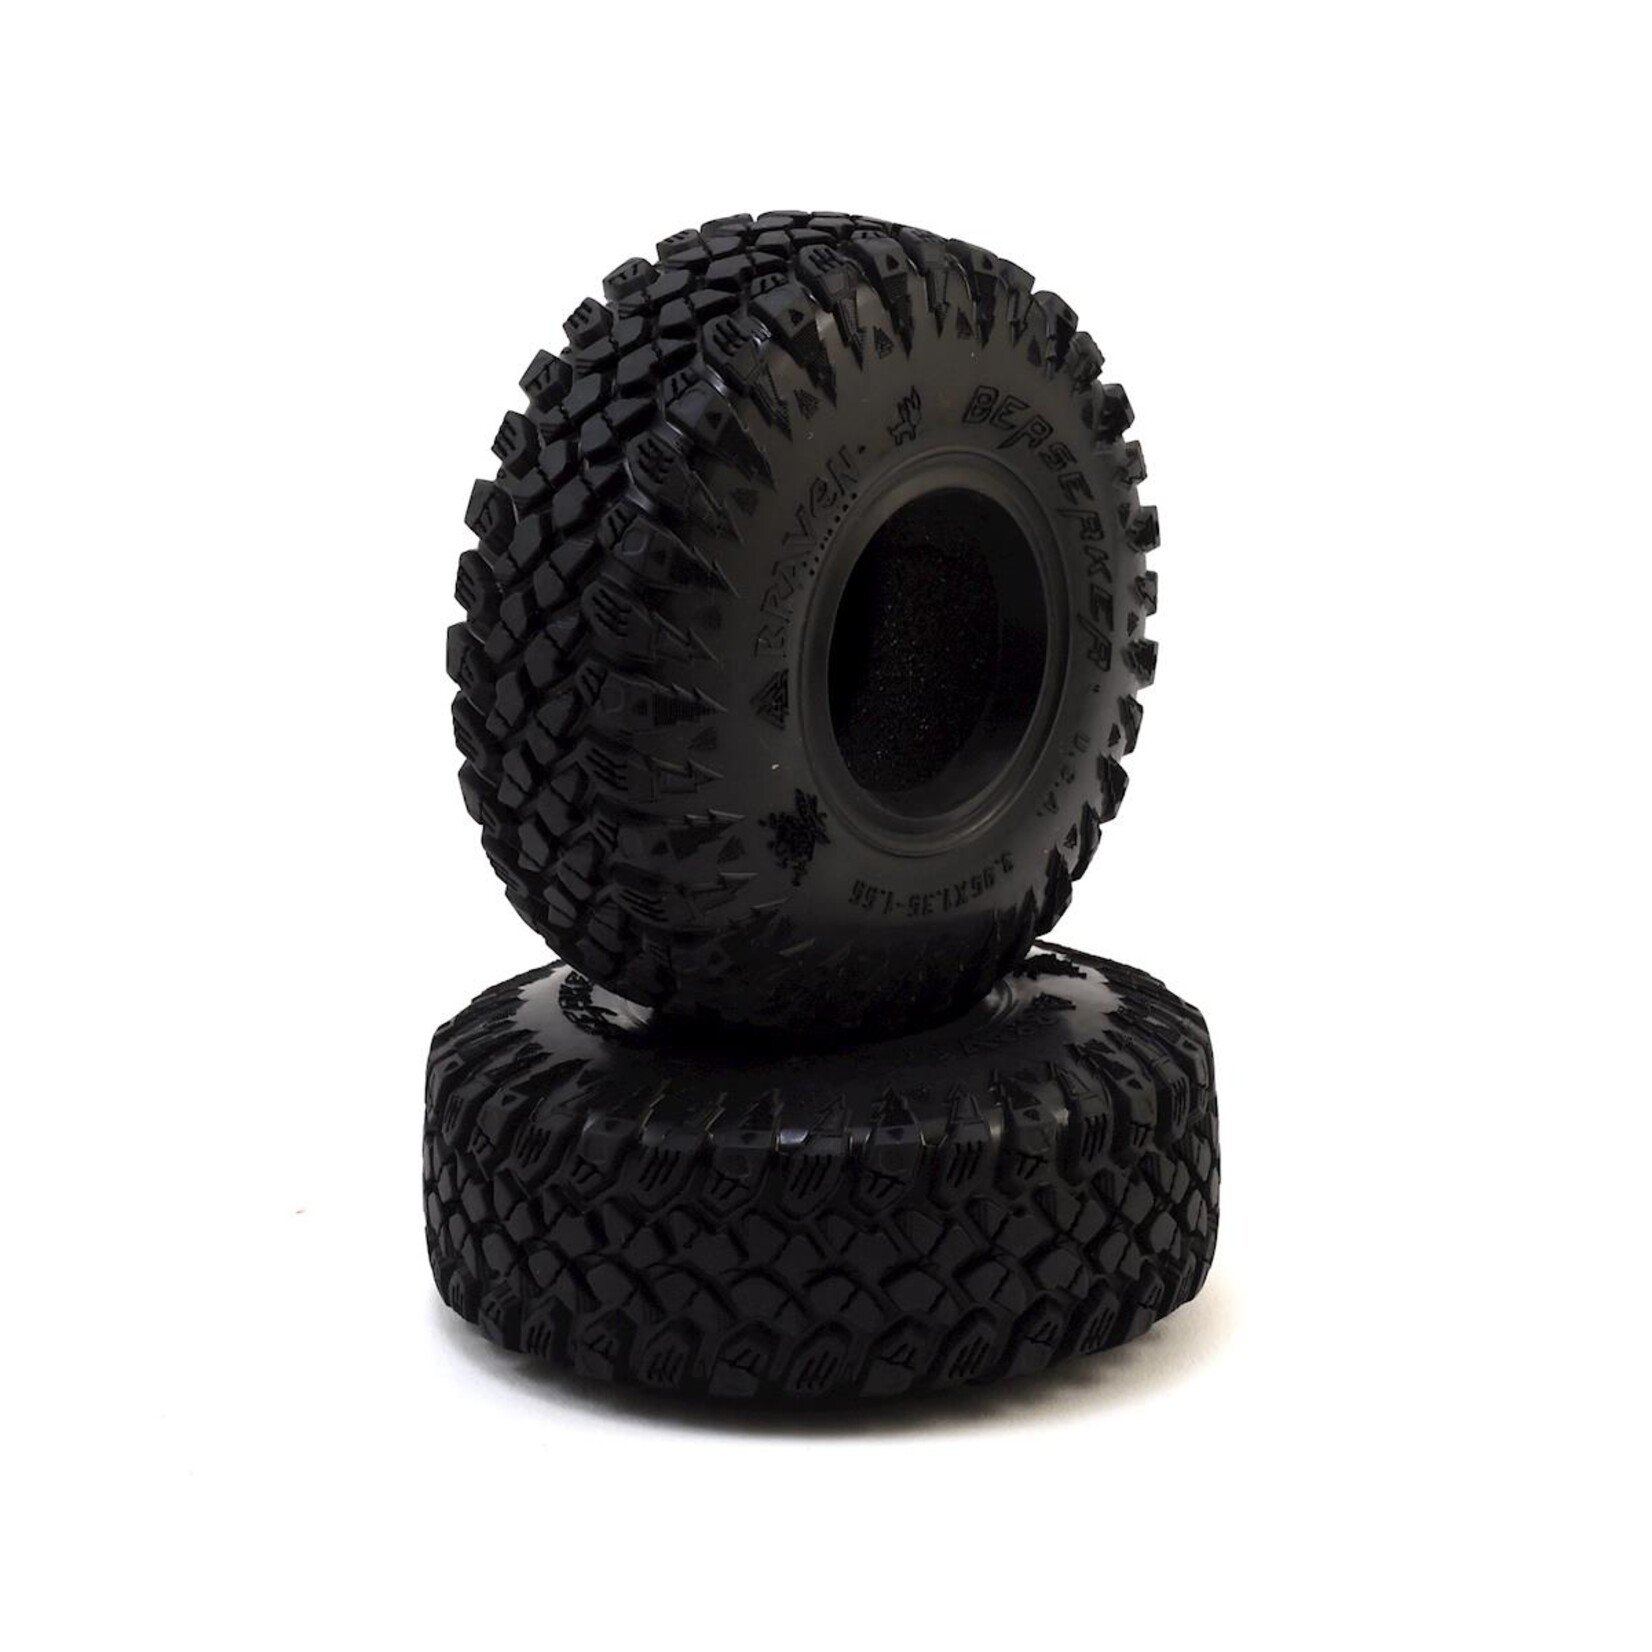 Pit Bull Pit Bull Tires Braven Berserker 1.55" Crawler Tire w/Foam (Alien) #PB9016AK